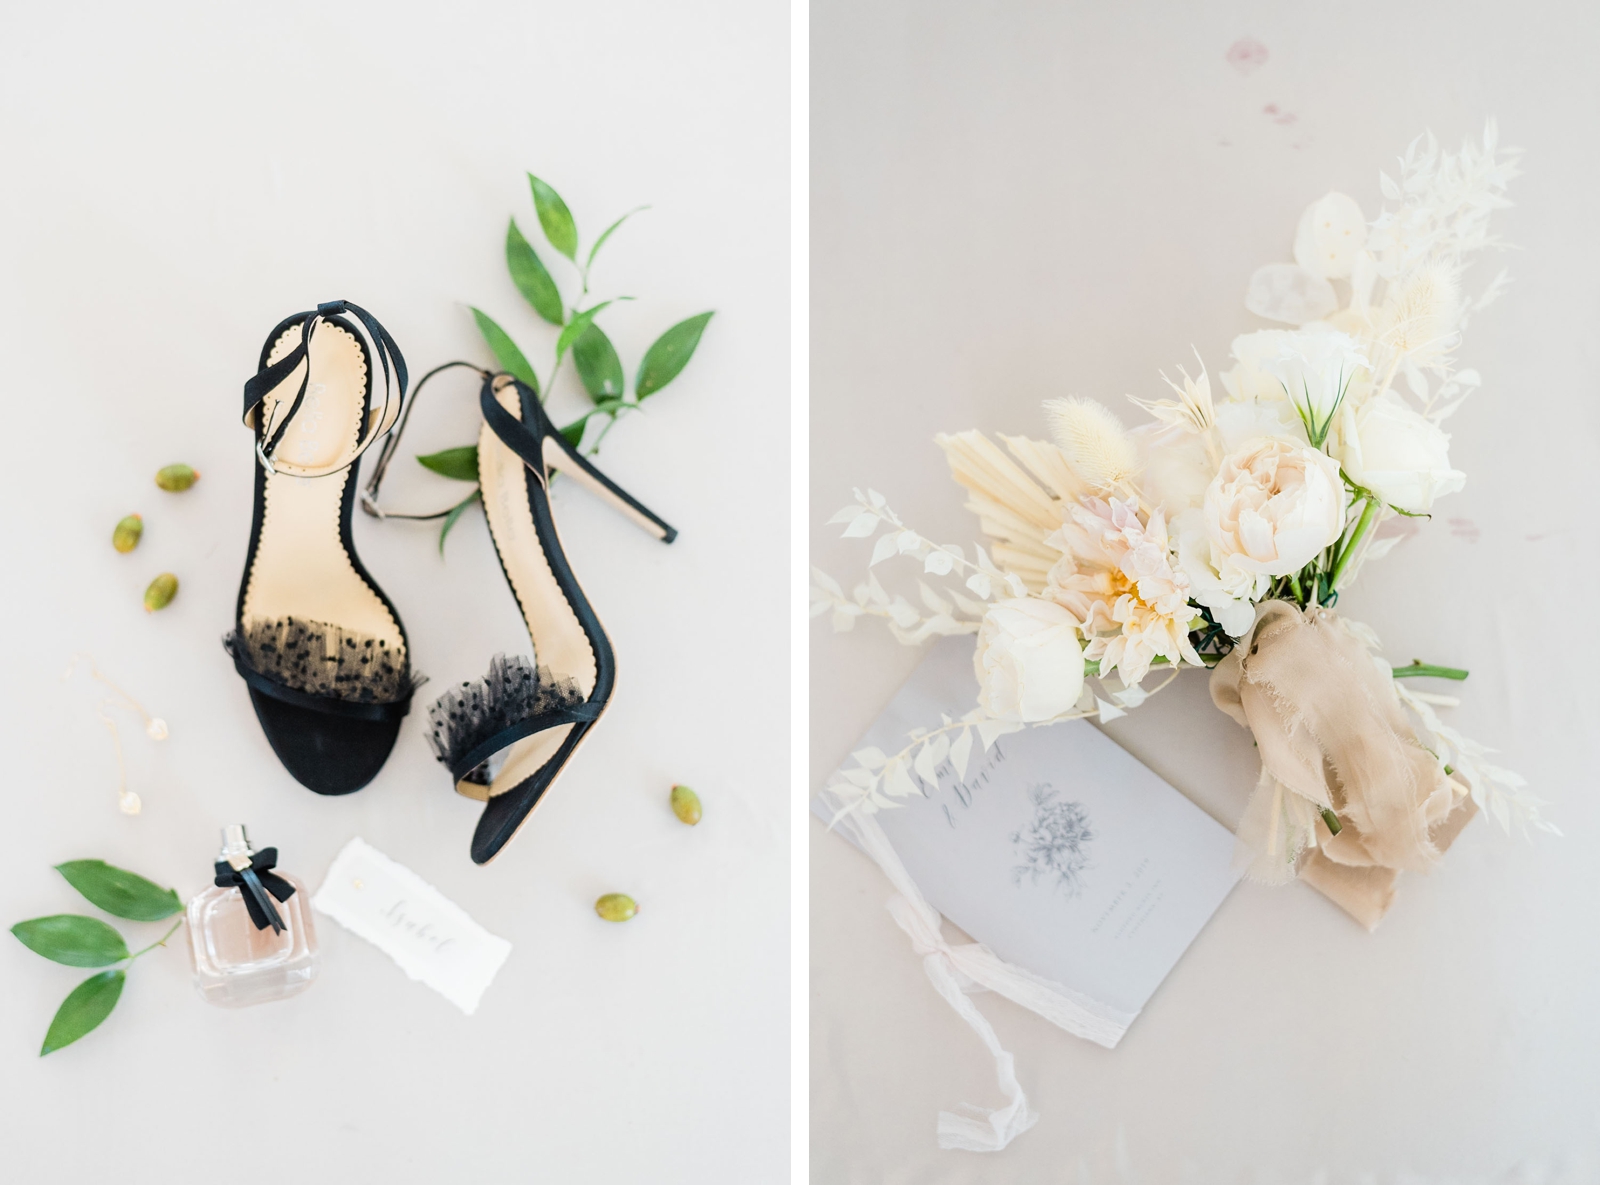 Black bridal shoes from Bella Belle Shoes